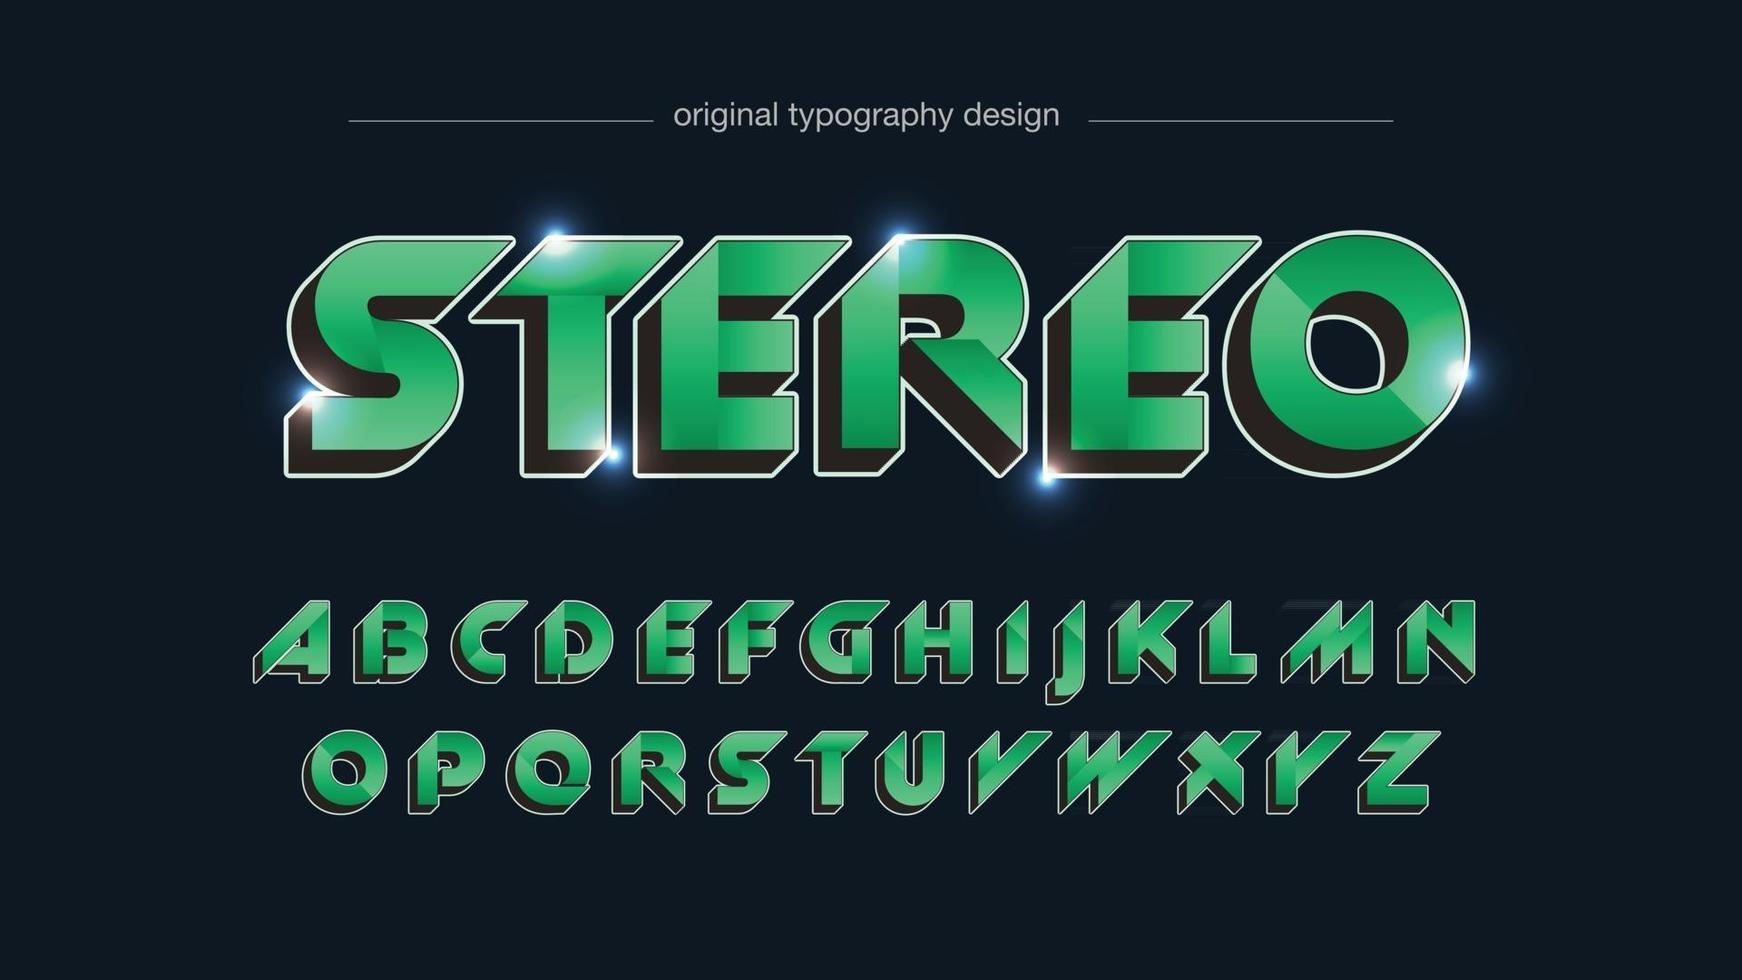 futuristisk ljusgrön typografi vektor